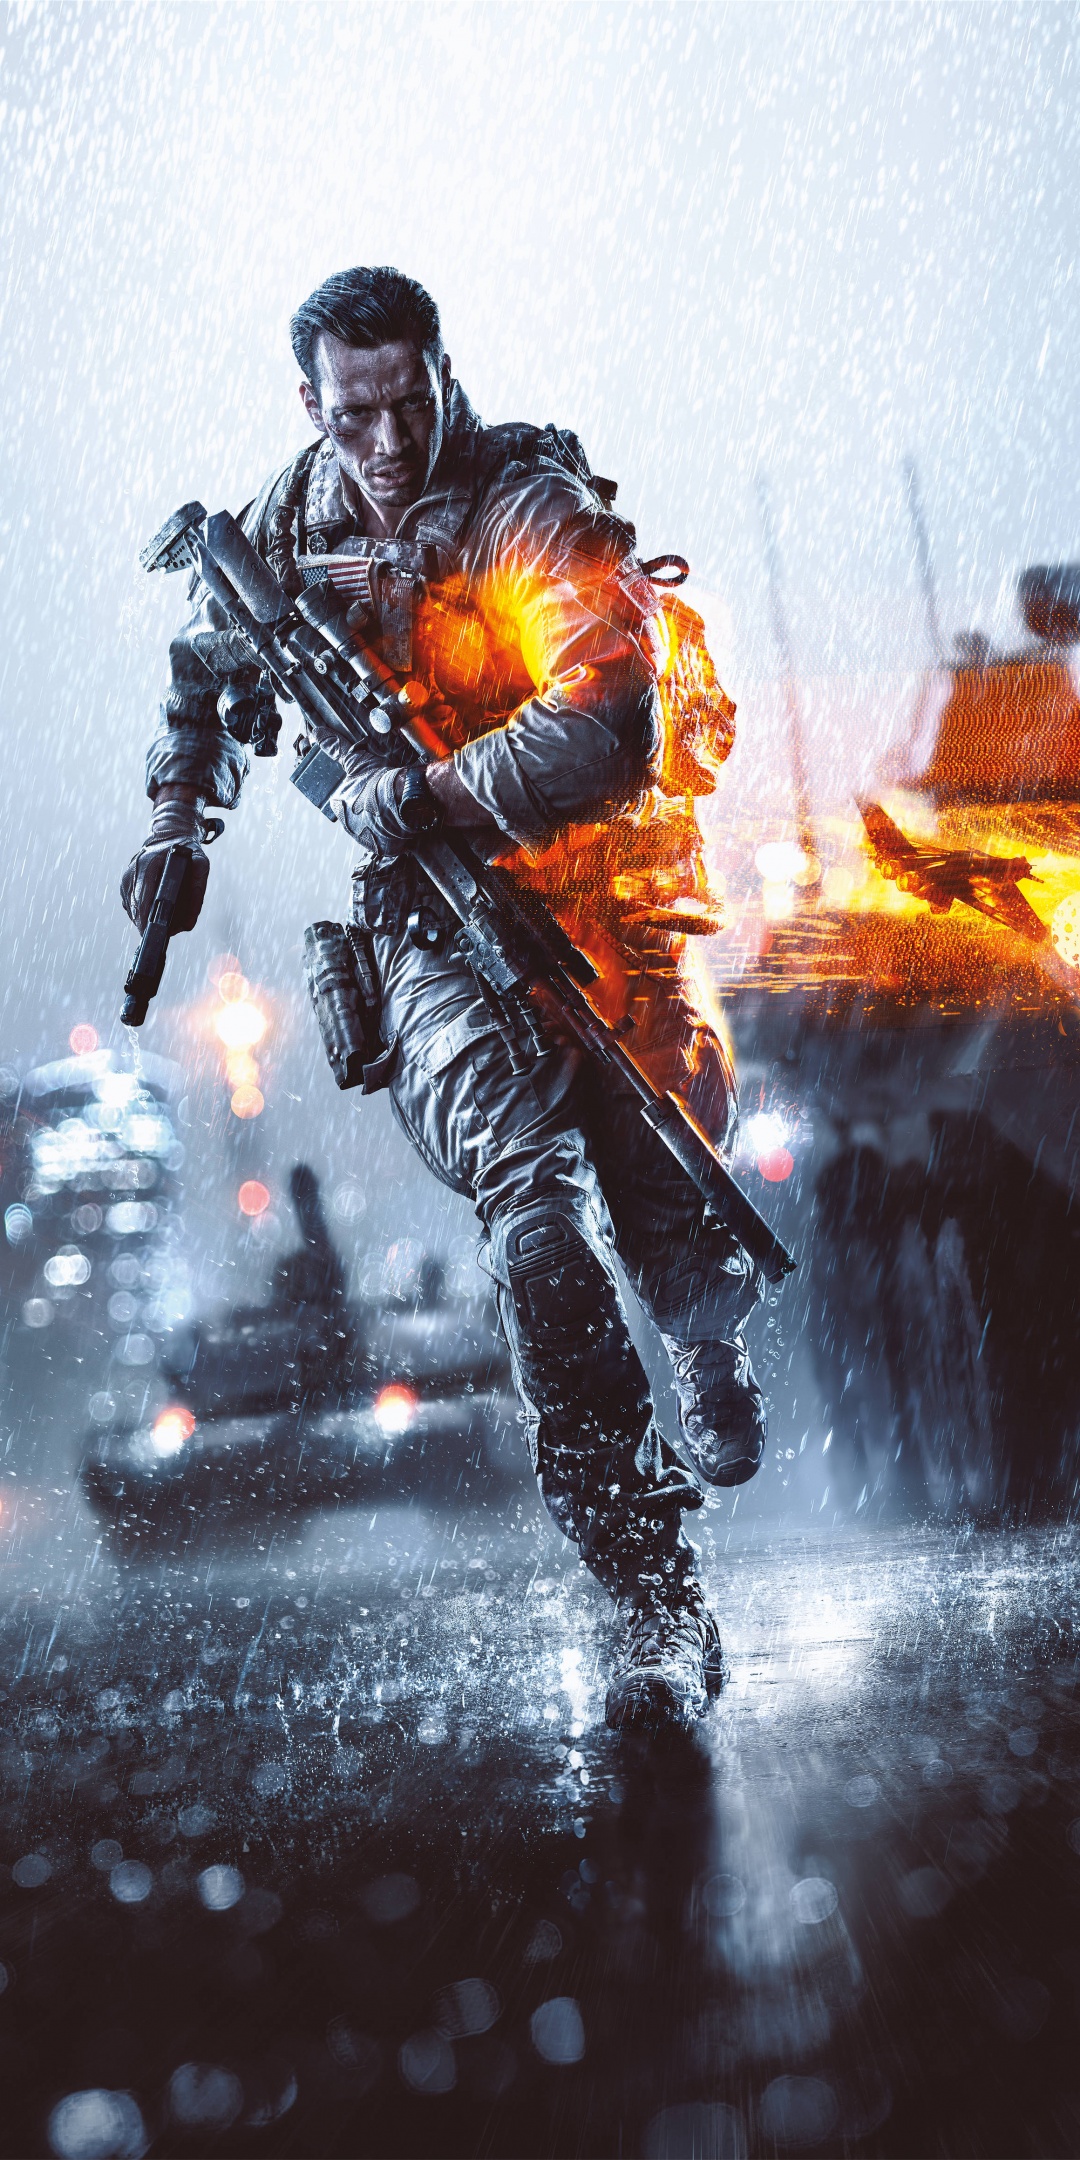 Battlefield 4 Wallpaper 4K, PlayStation 4, PlayStation 3, Xbox One